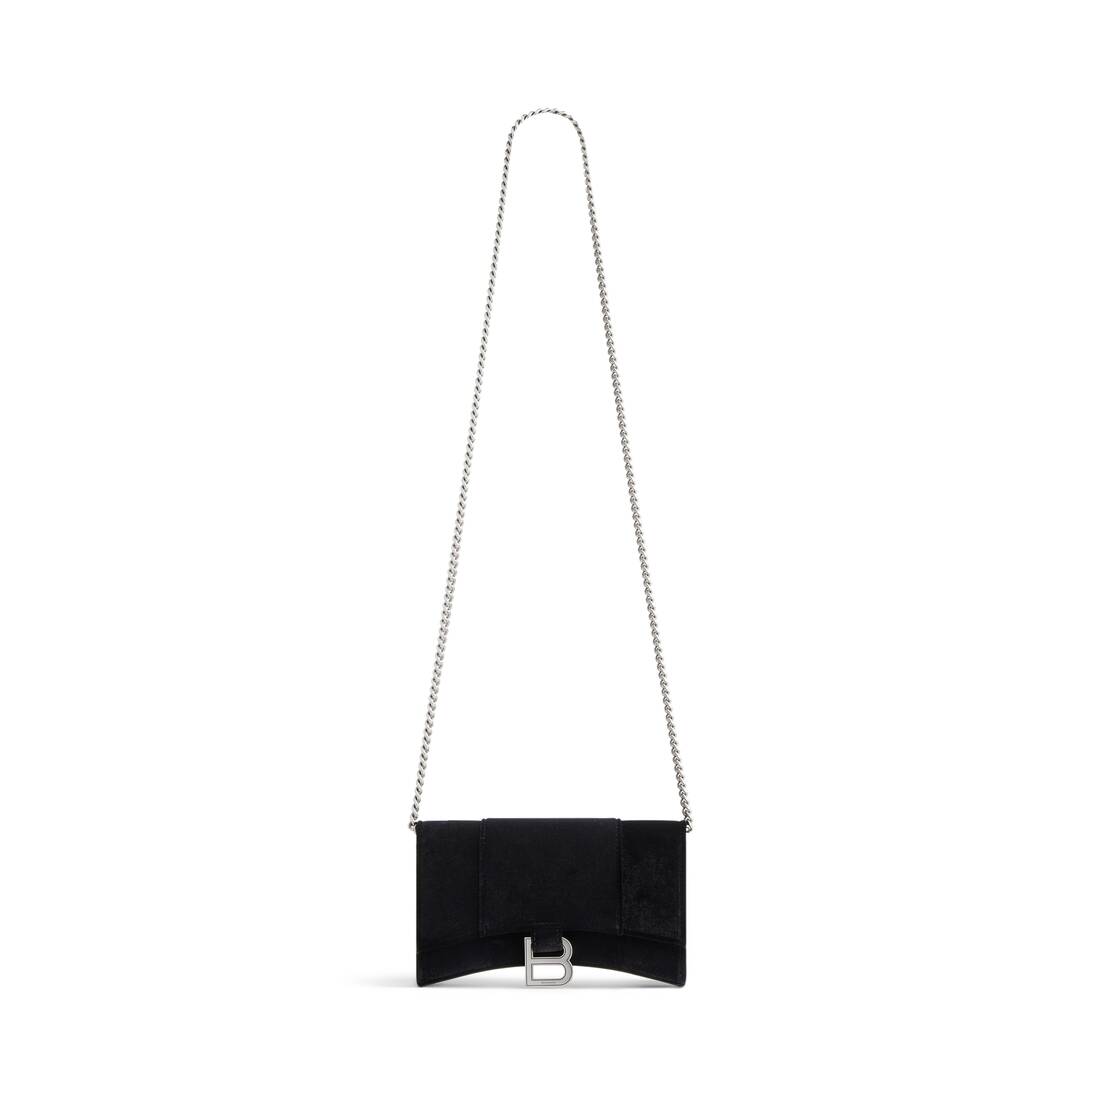 Balenciaga Women's Hourglass Leather Wallet-On-Chain Black